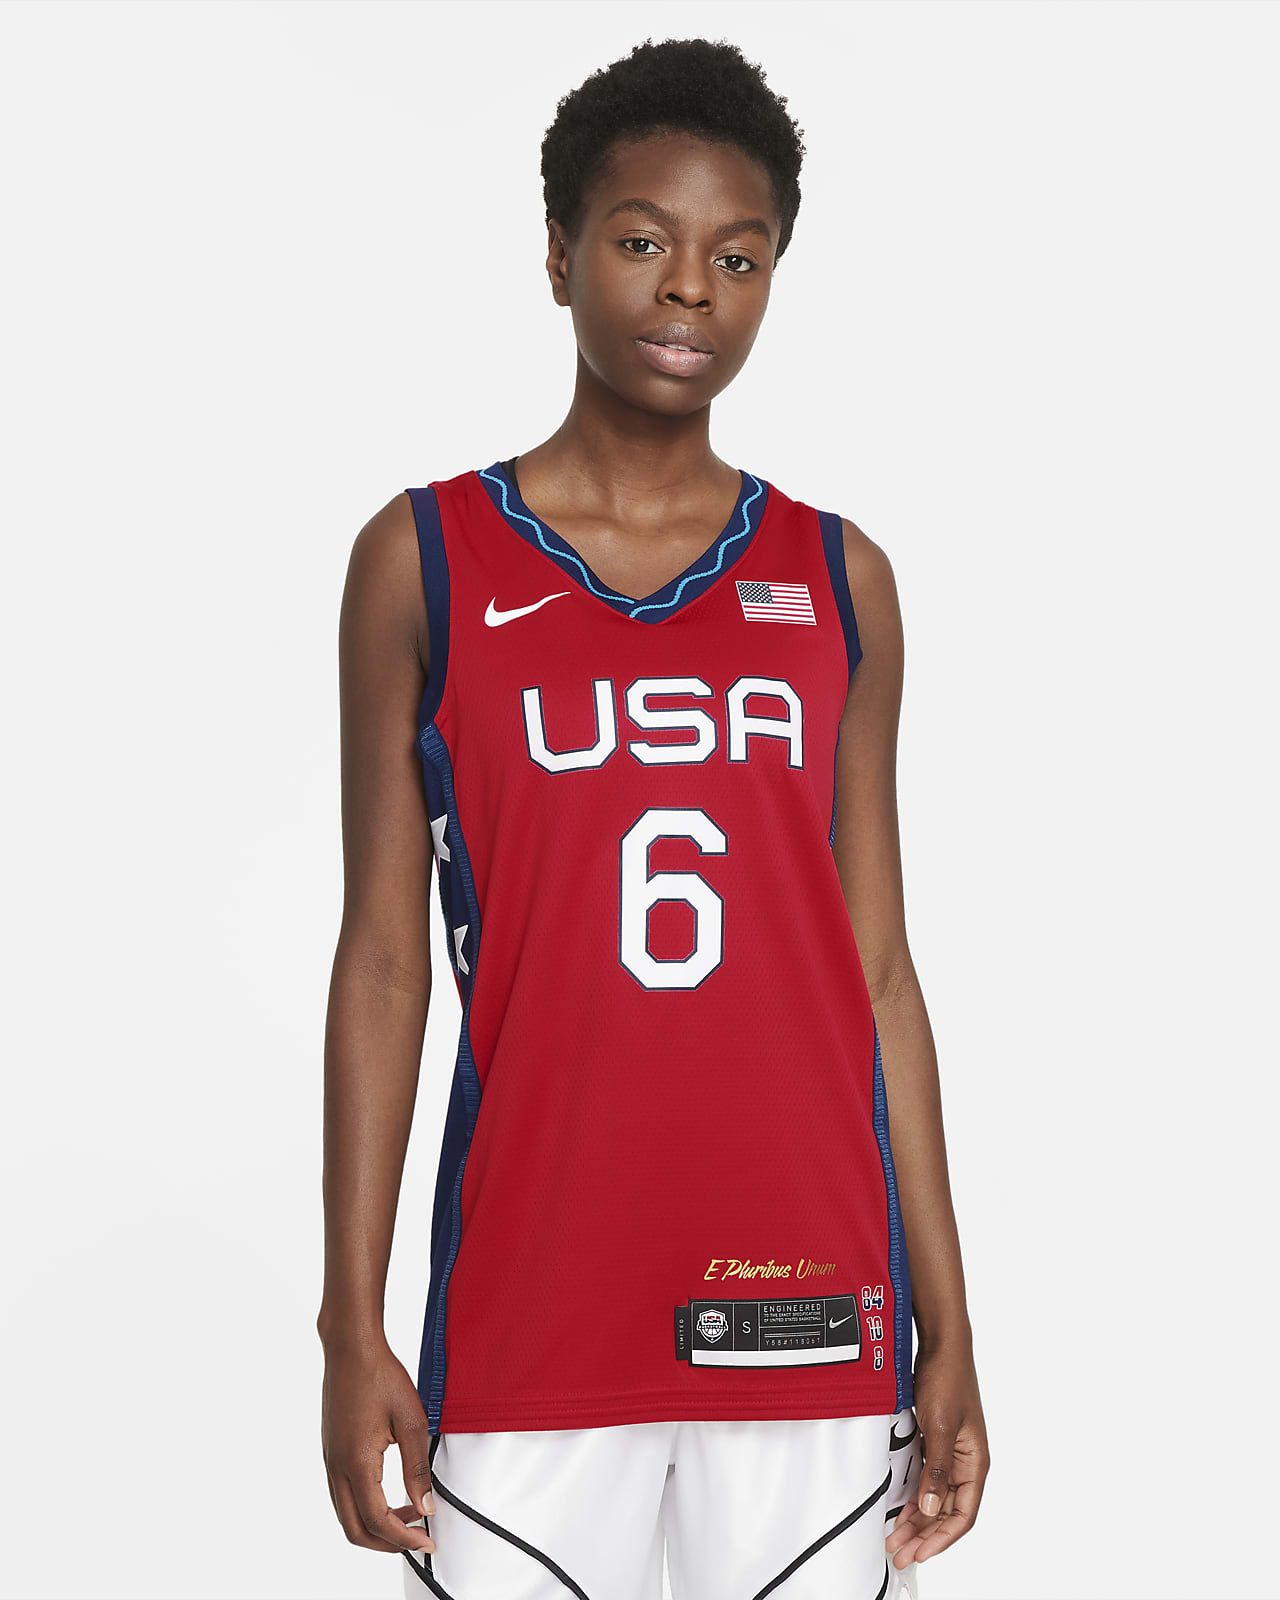 Soaked Pine kollektion Nike Team USA (Sue Bird) (Road) Women's Basketball Jersey. Nike.com